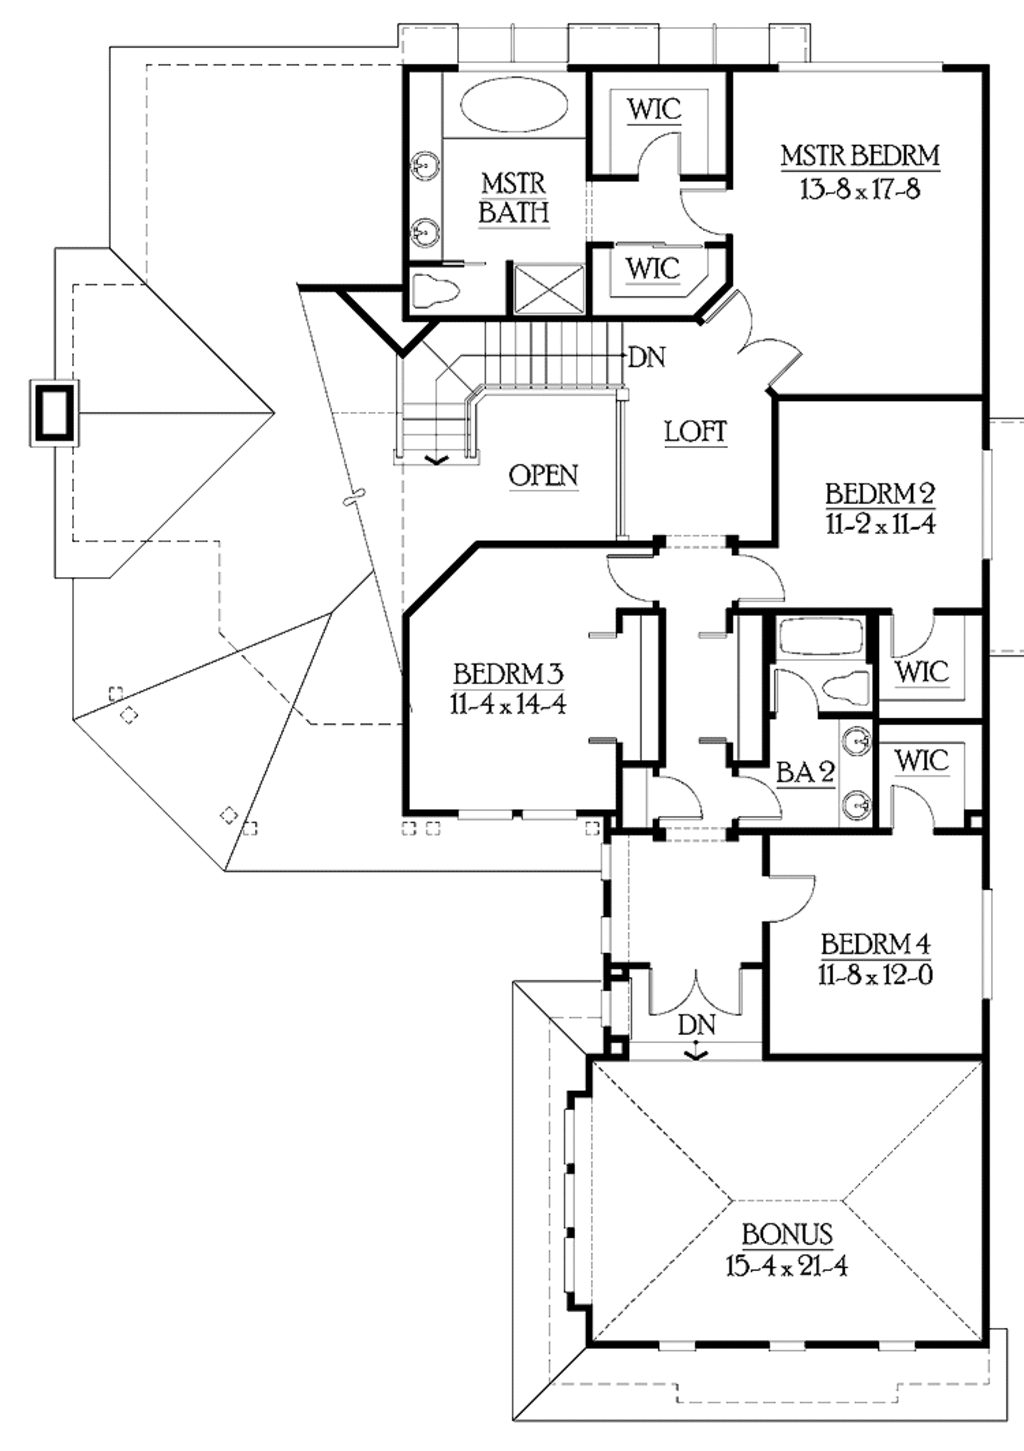 craftsman-style-house-plan-6-beds-3-5-baths-4634-sq-ft-plan-132-450